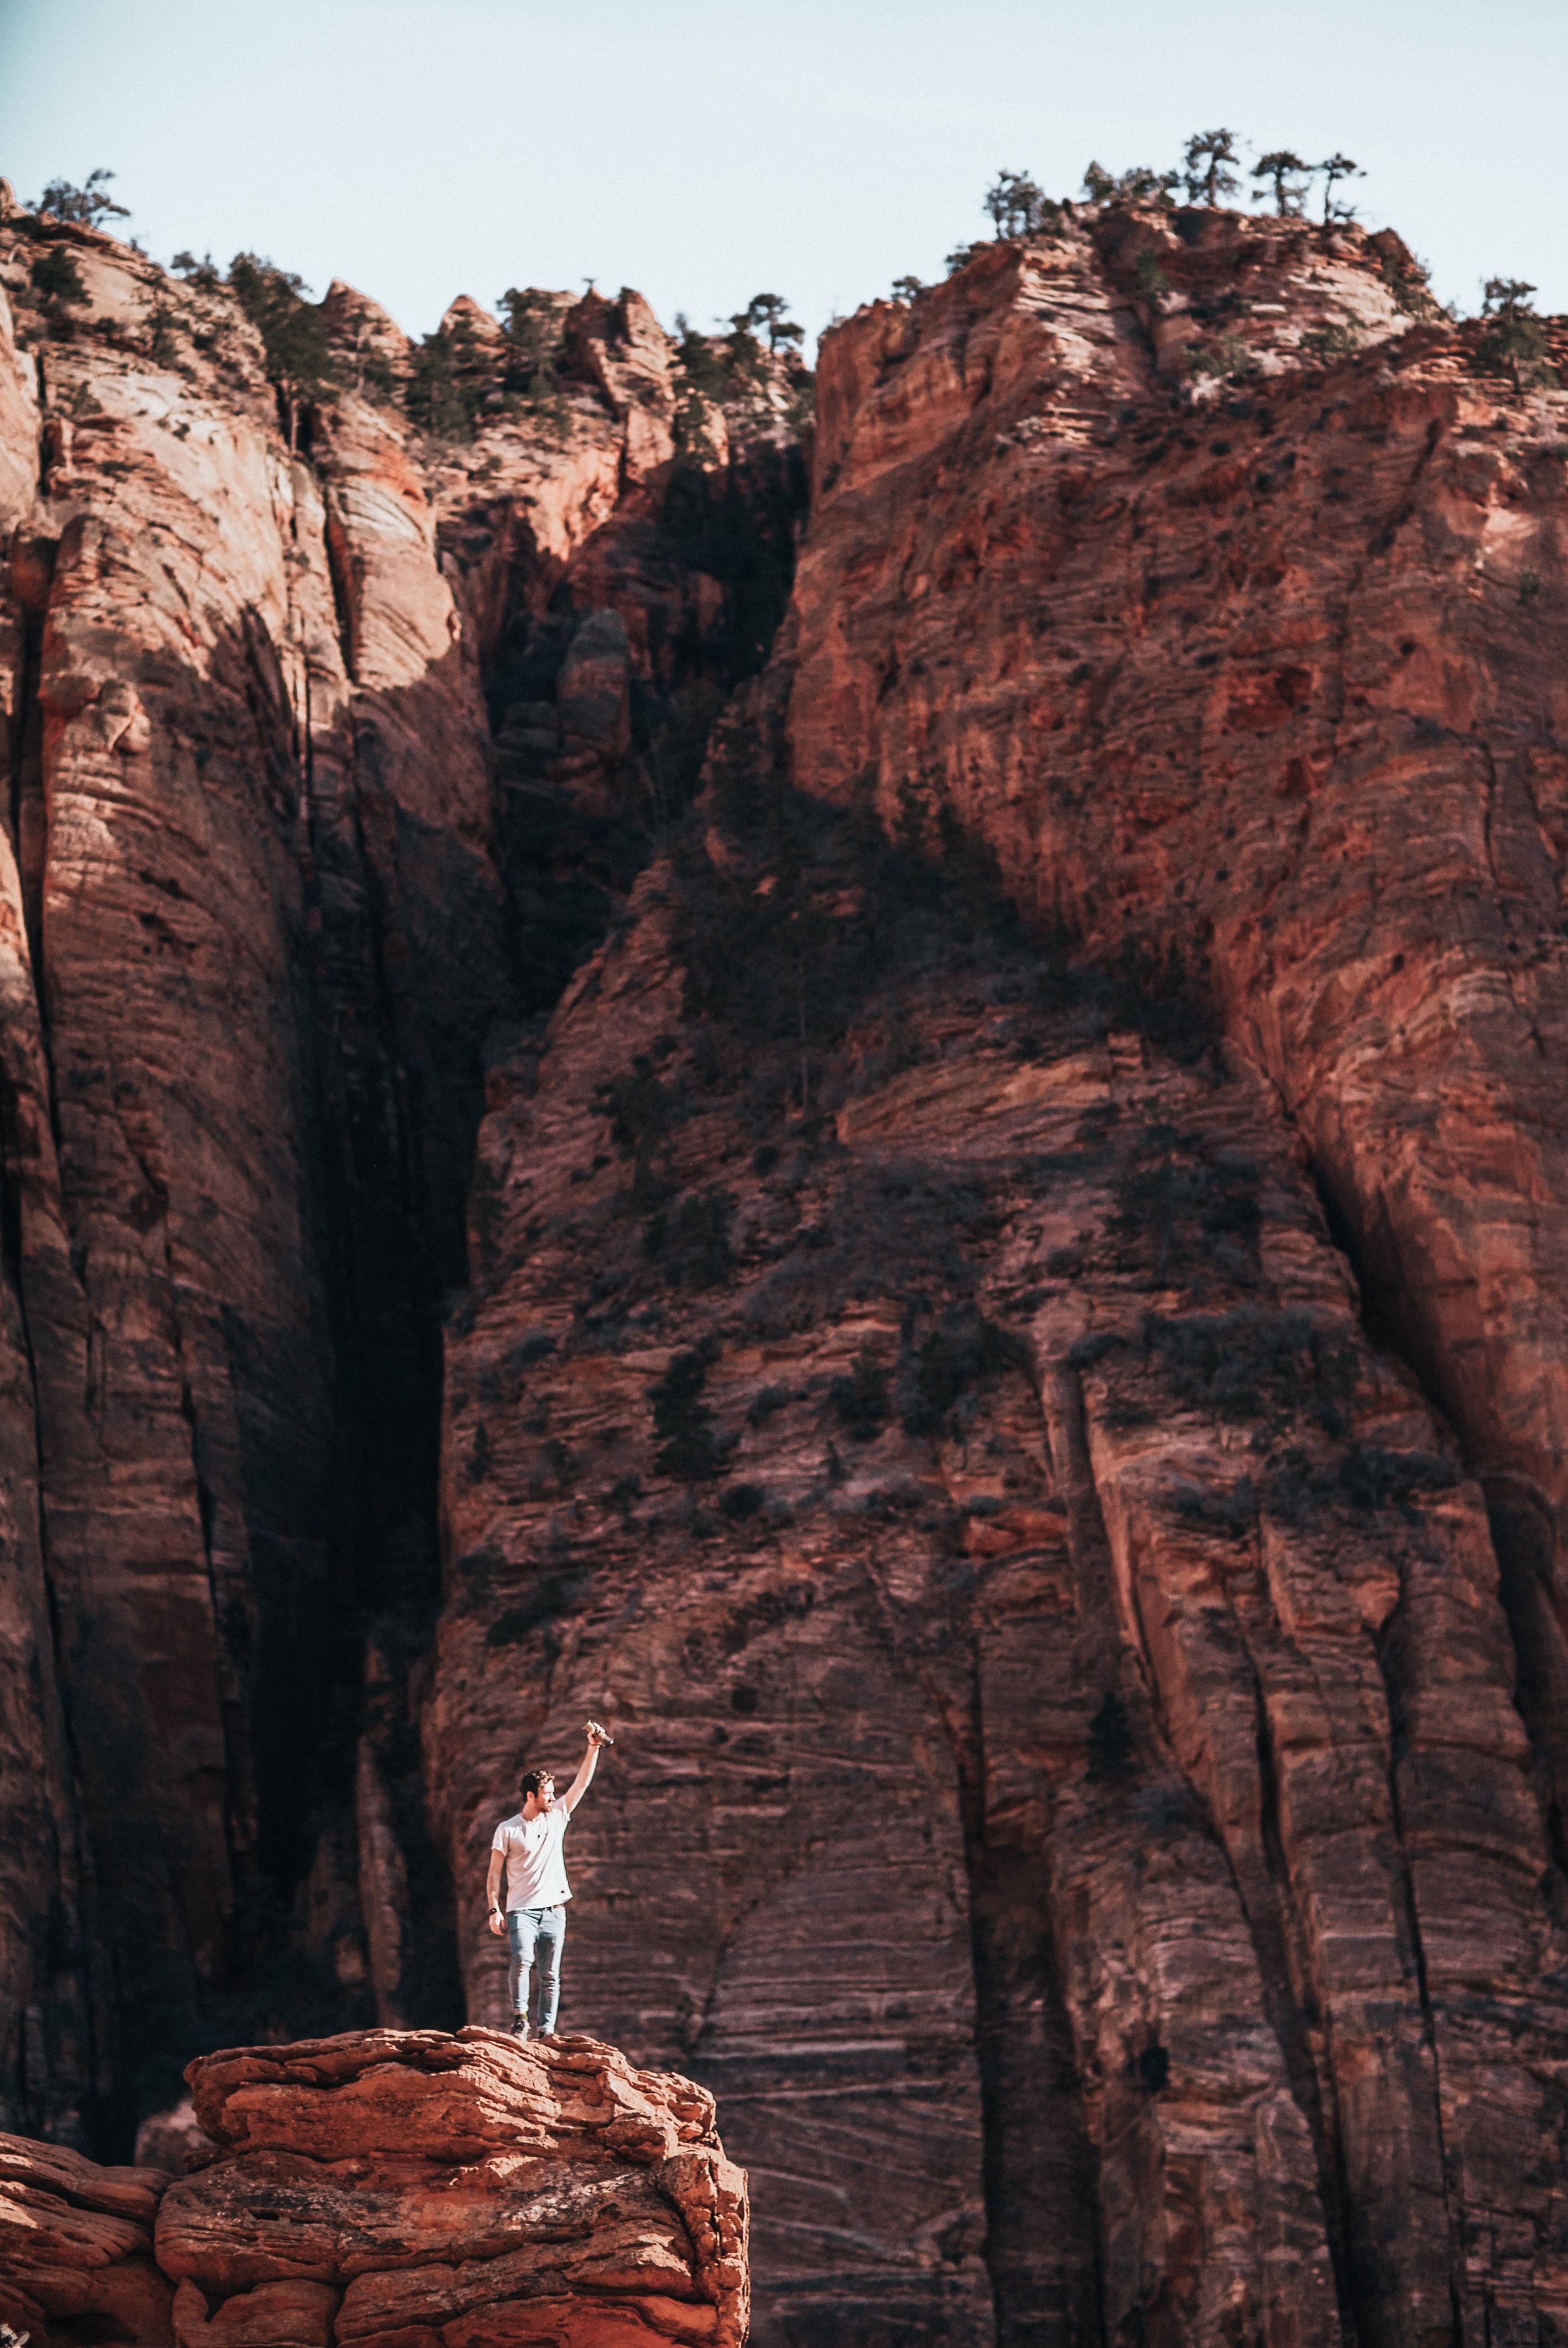 Foto Pejalan Kaki Di Dataran Tinggi Canyon